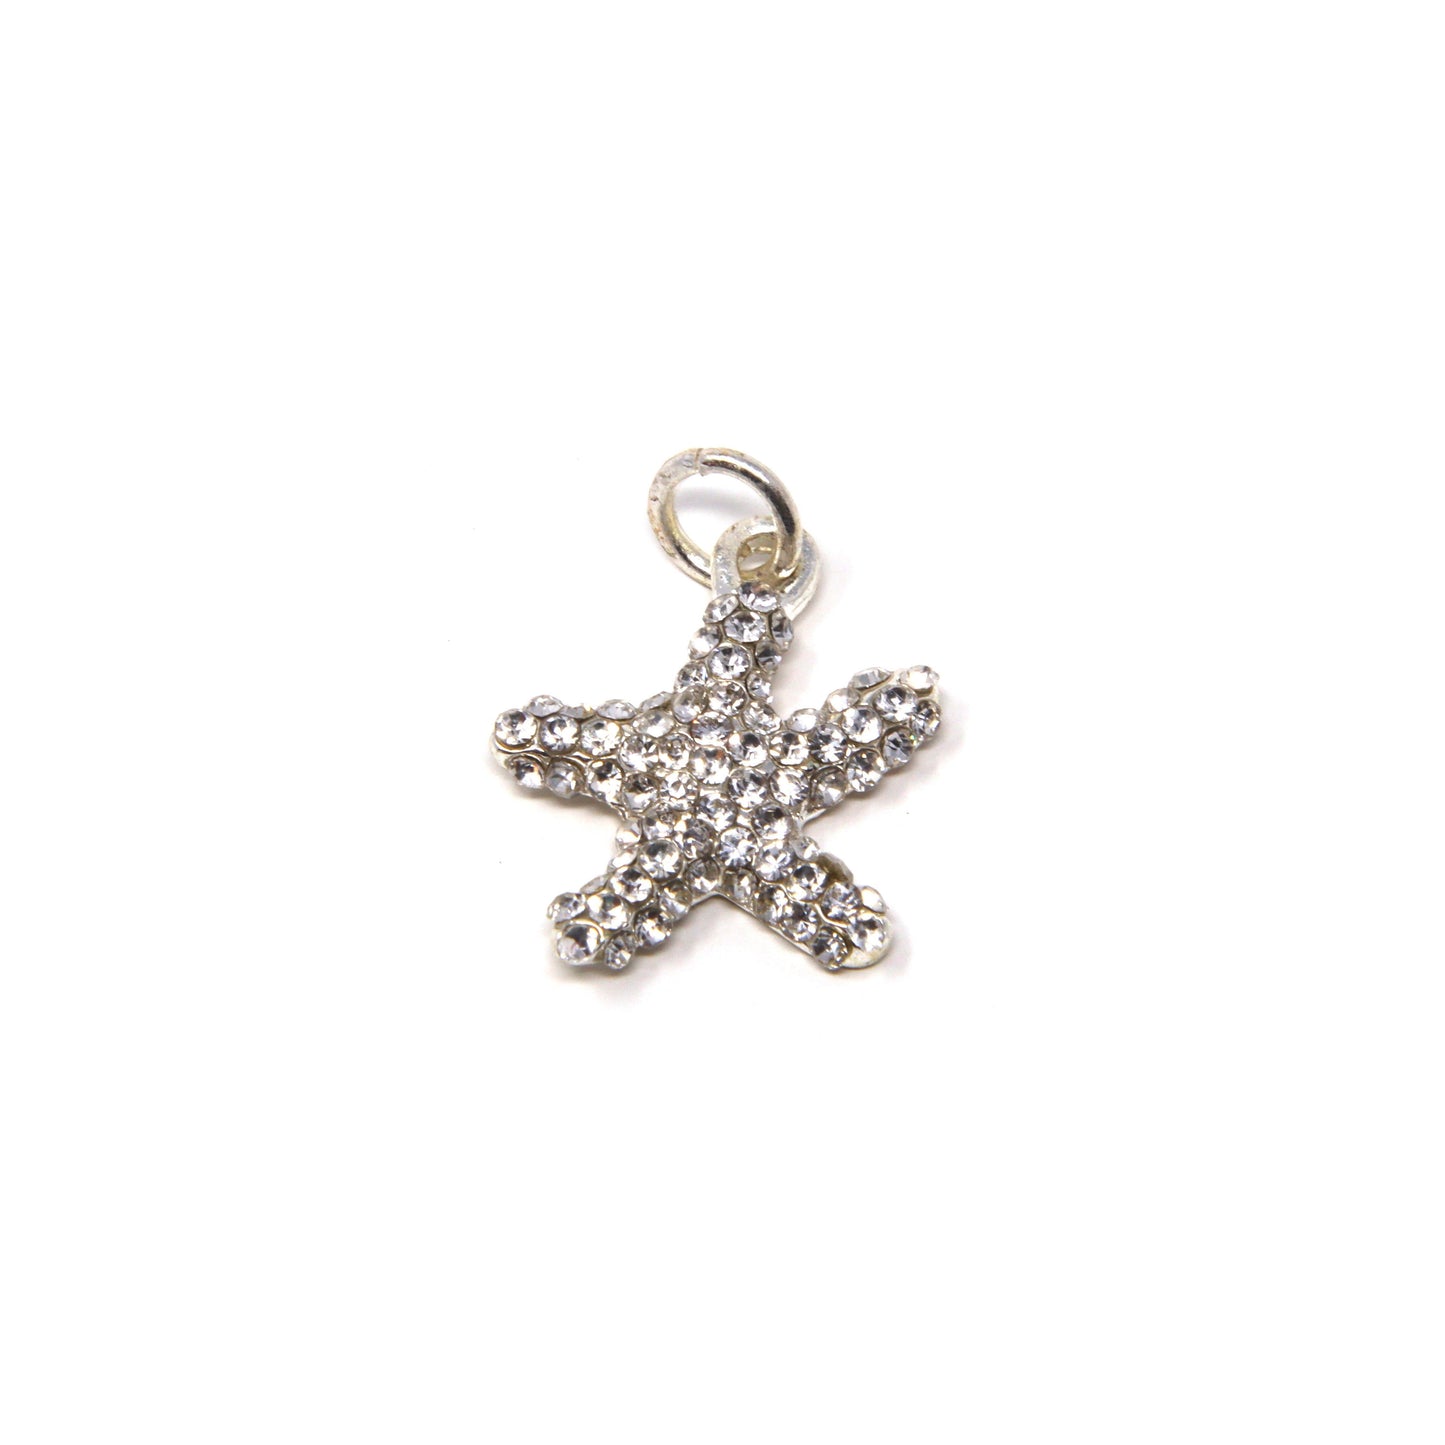 5/8 inch Silver Starfish Charm